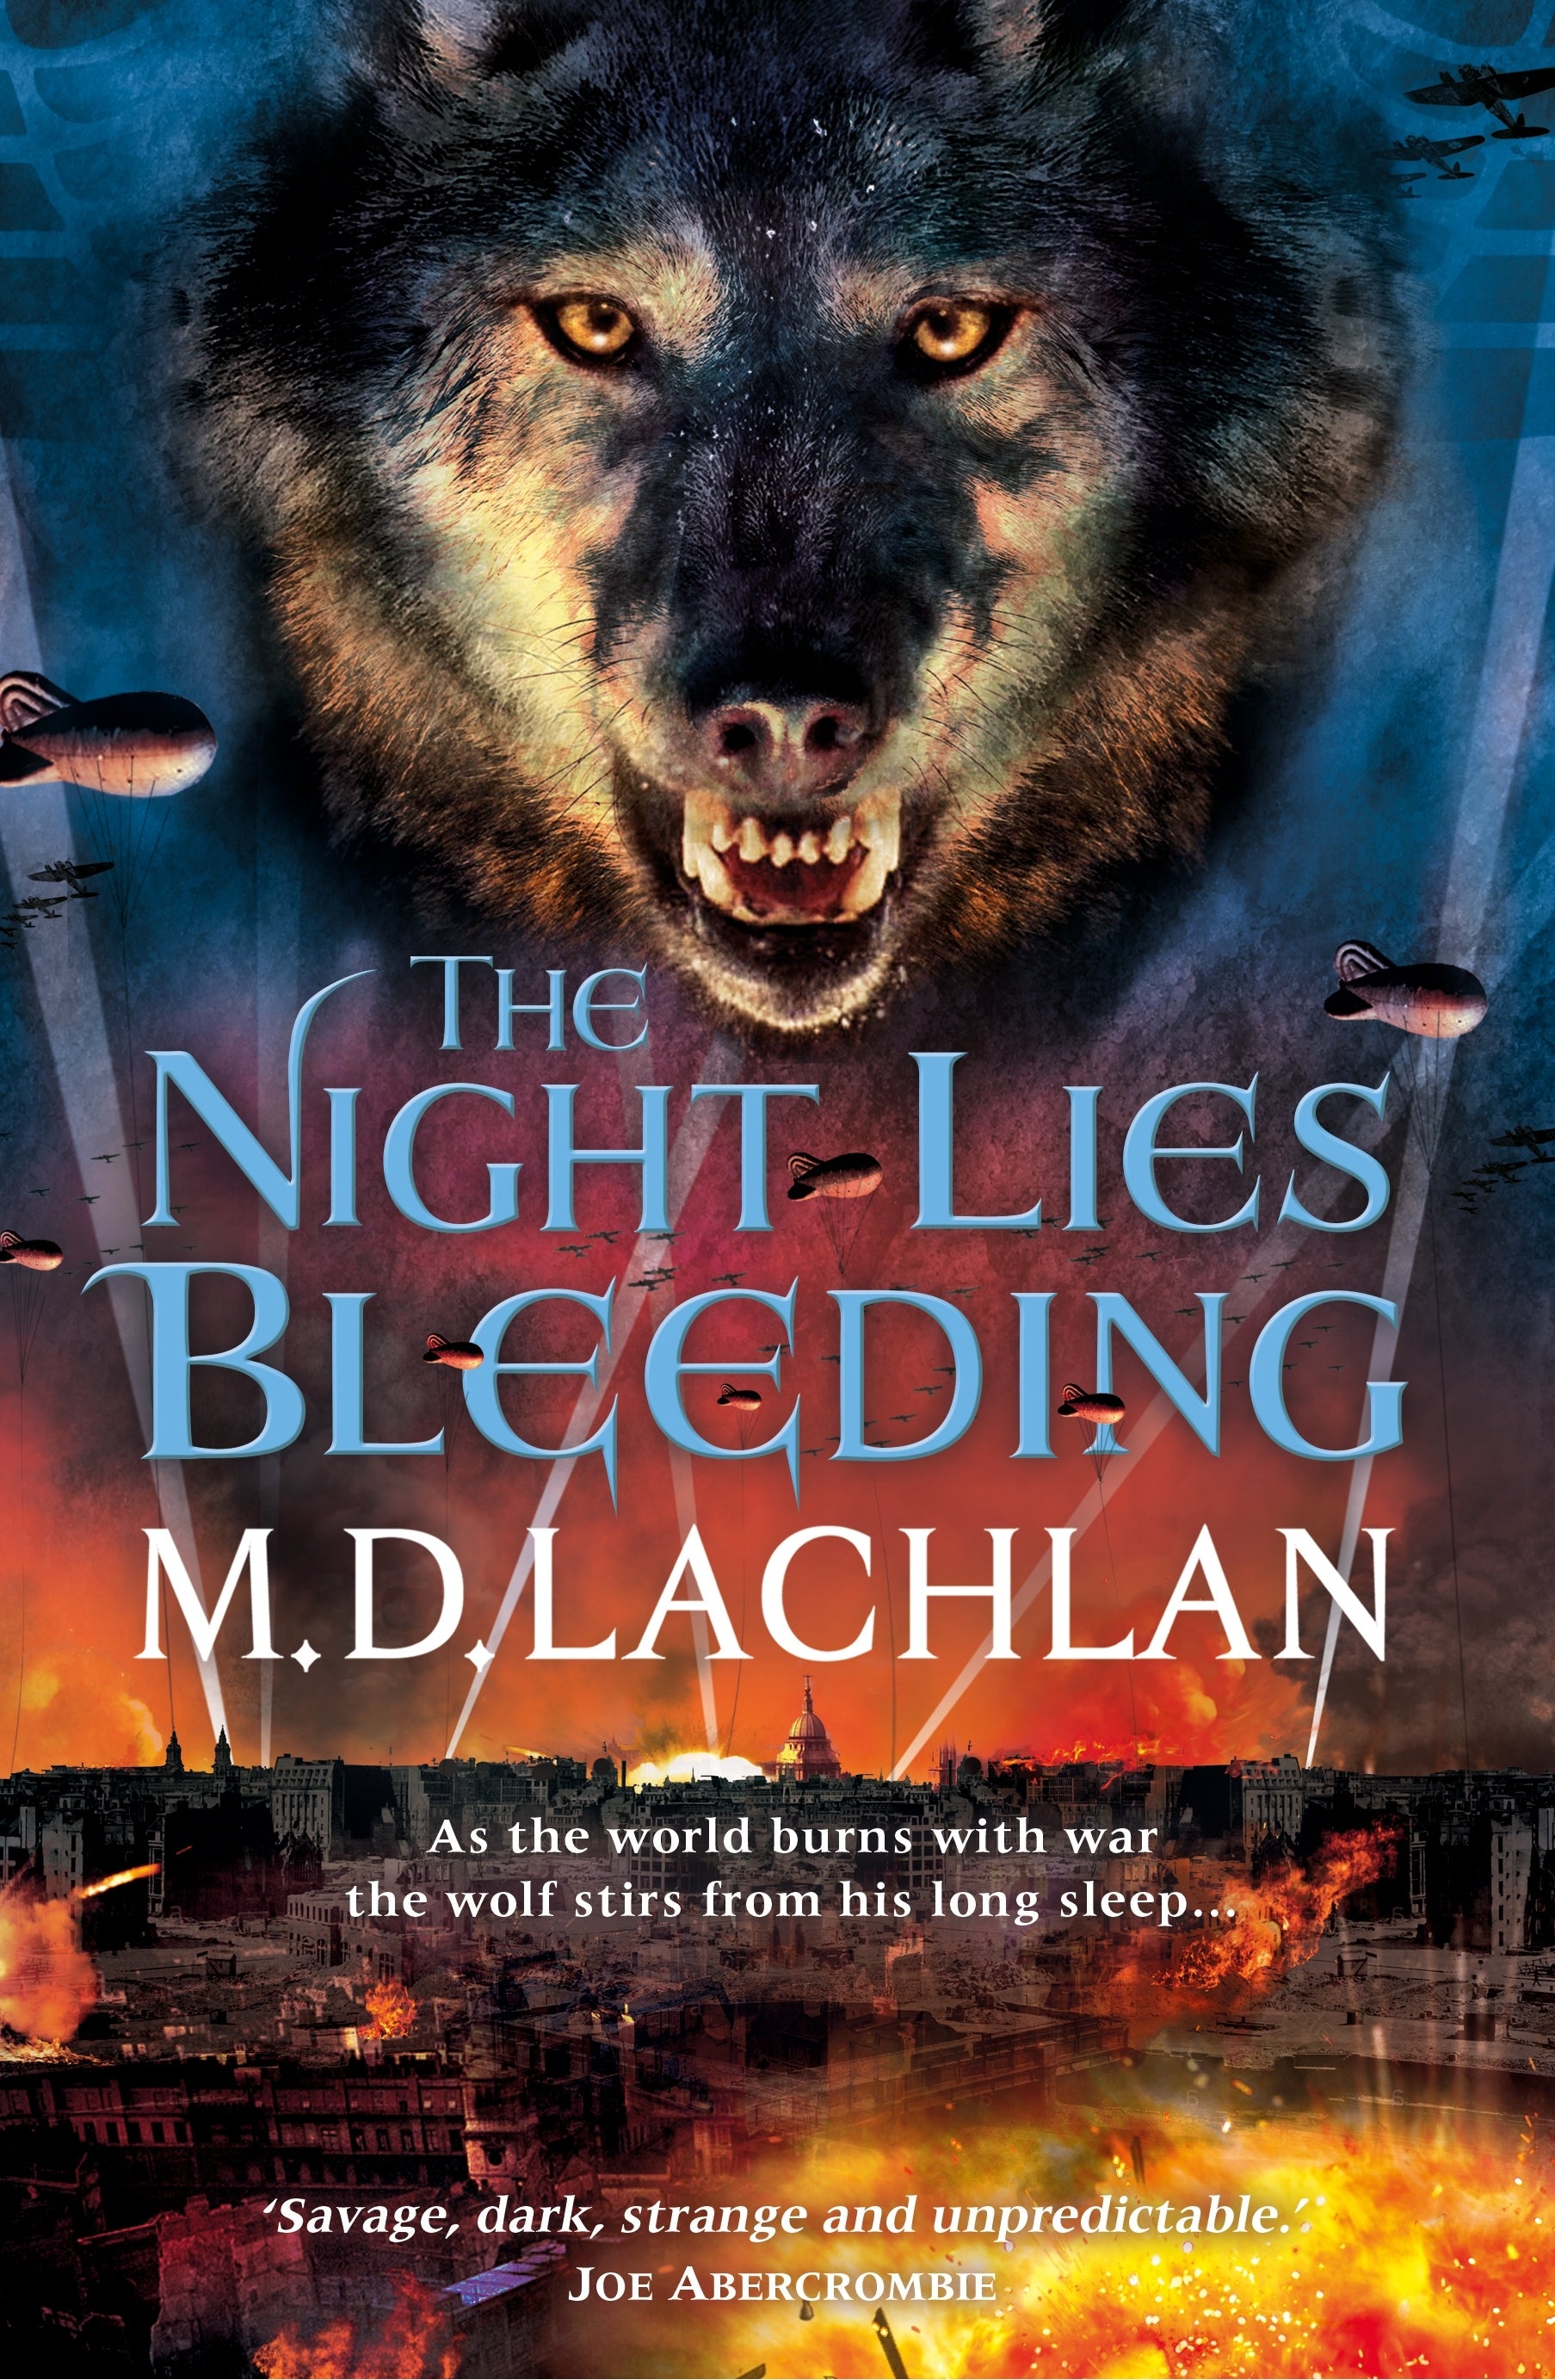 The Night Lies Bleeding by M.D. Lachlan